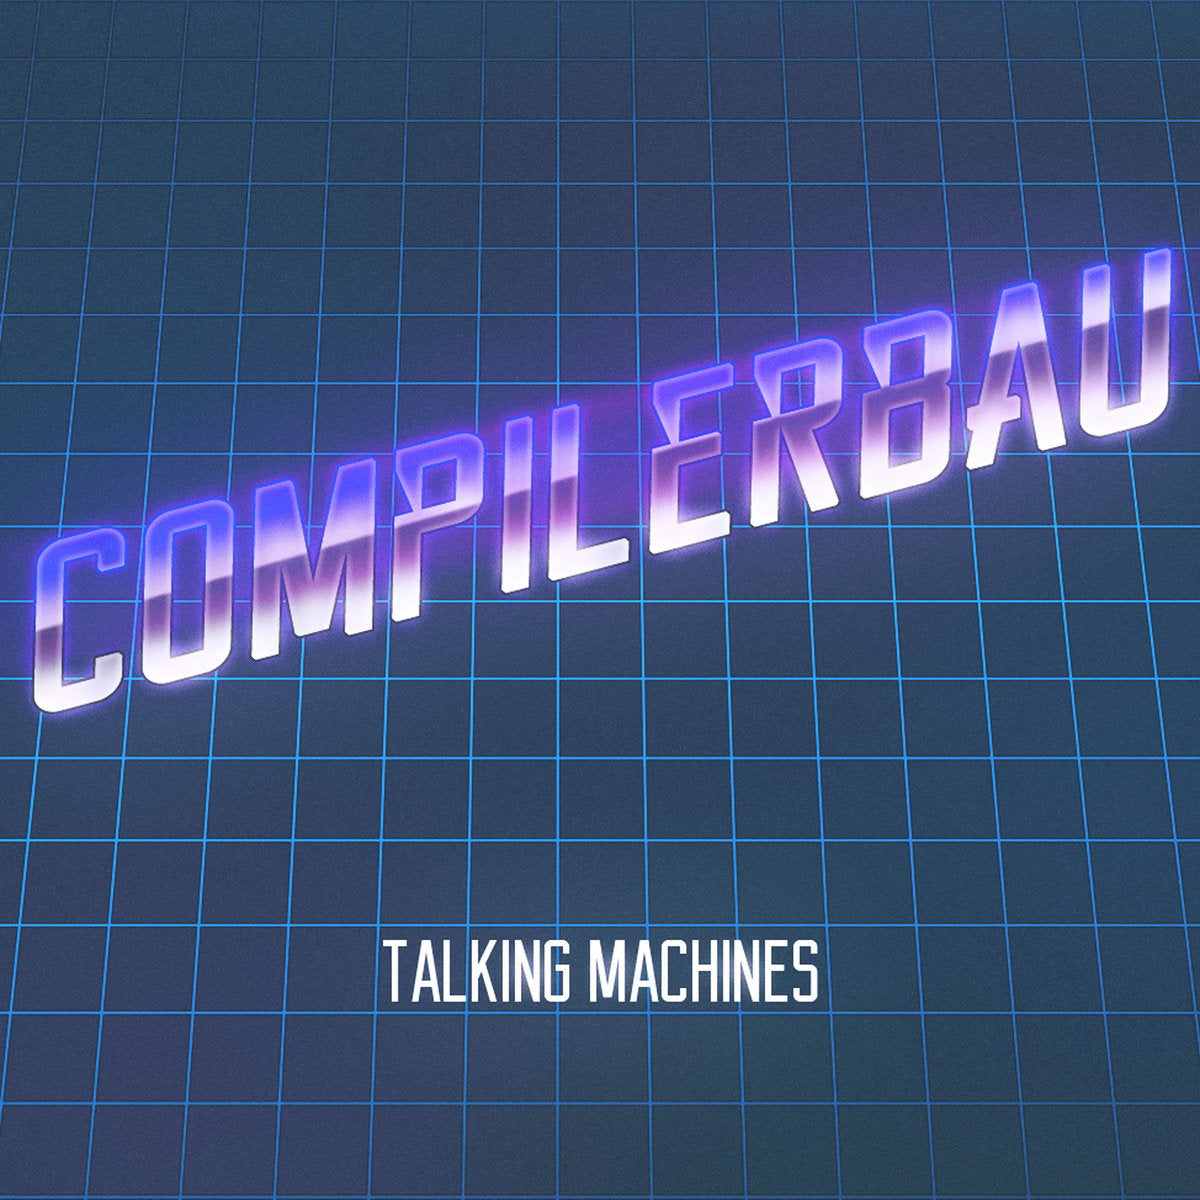 [SOLD OUT] COMPILERBAU "Talking Machines" vinyl LP (color, 180g, gatefold)